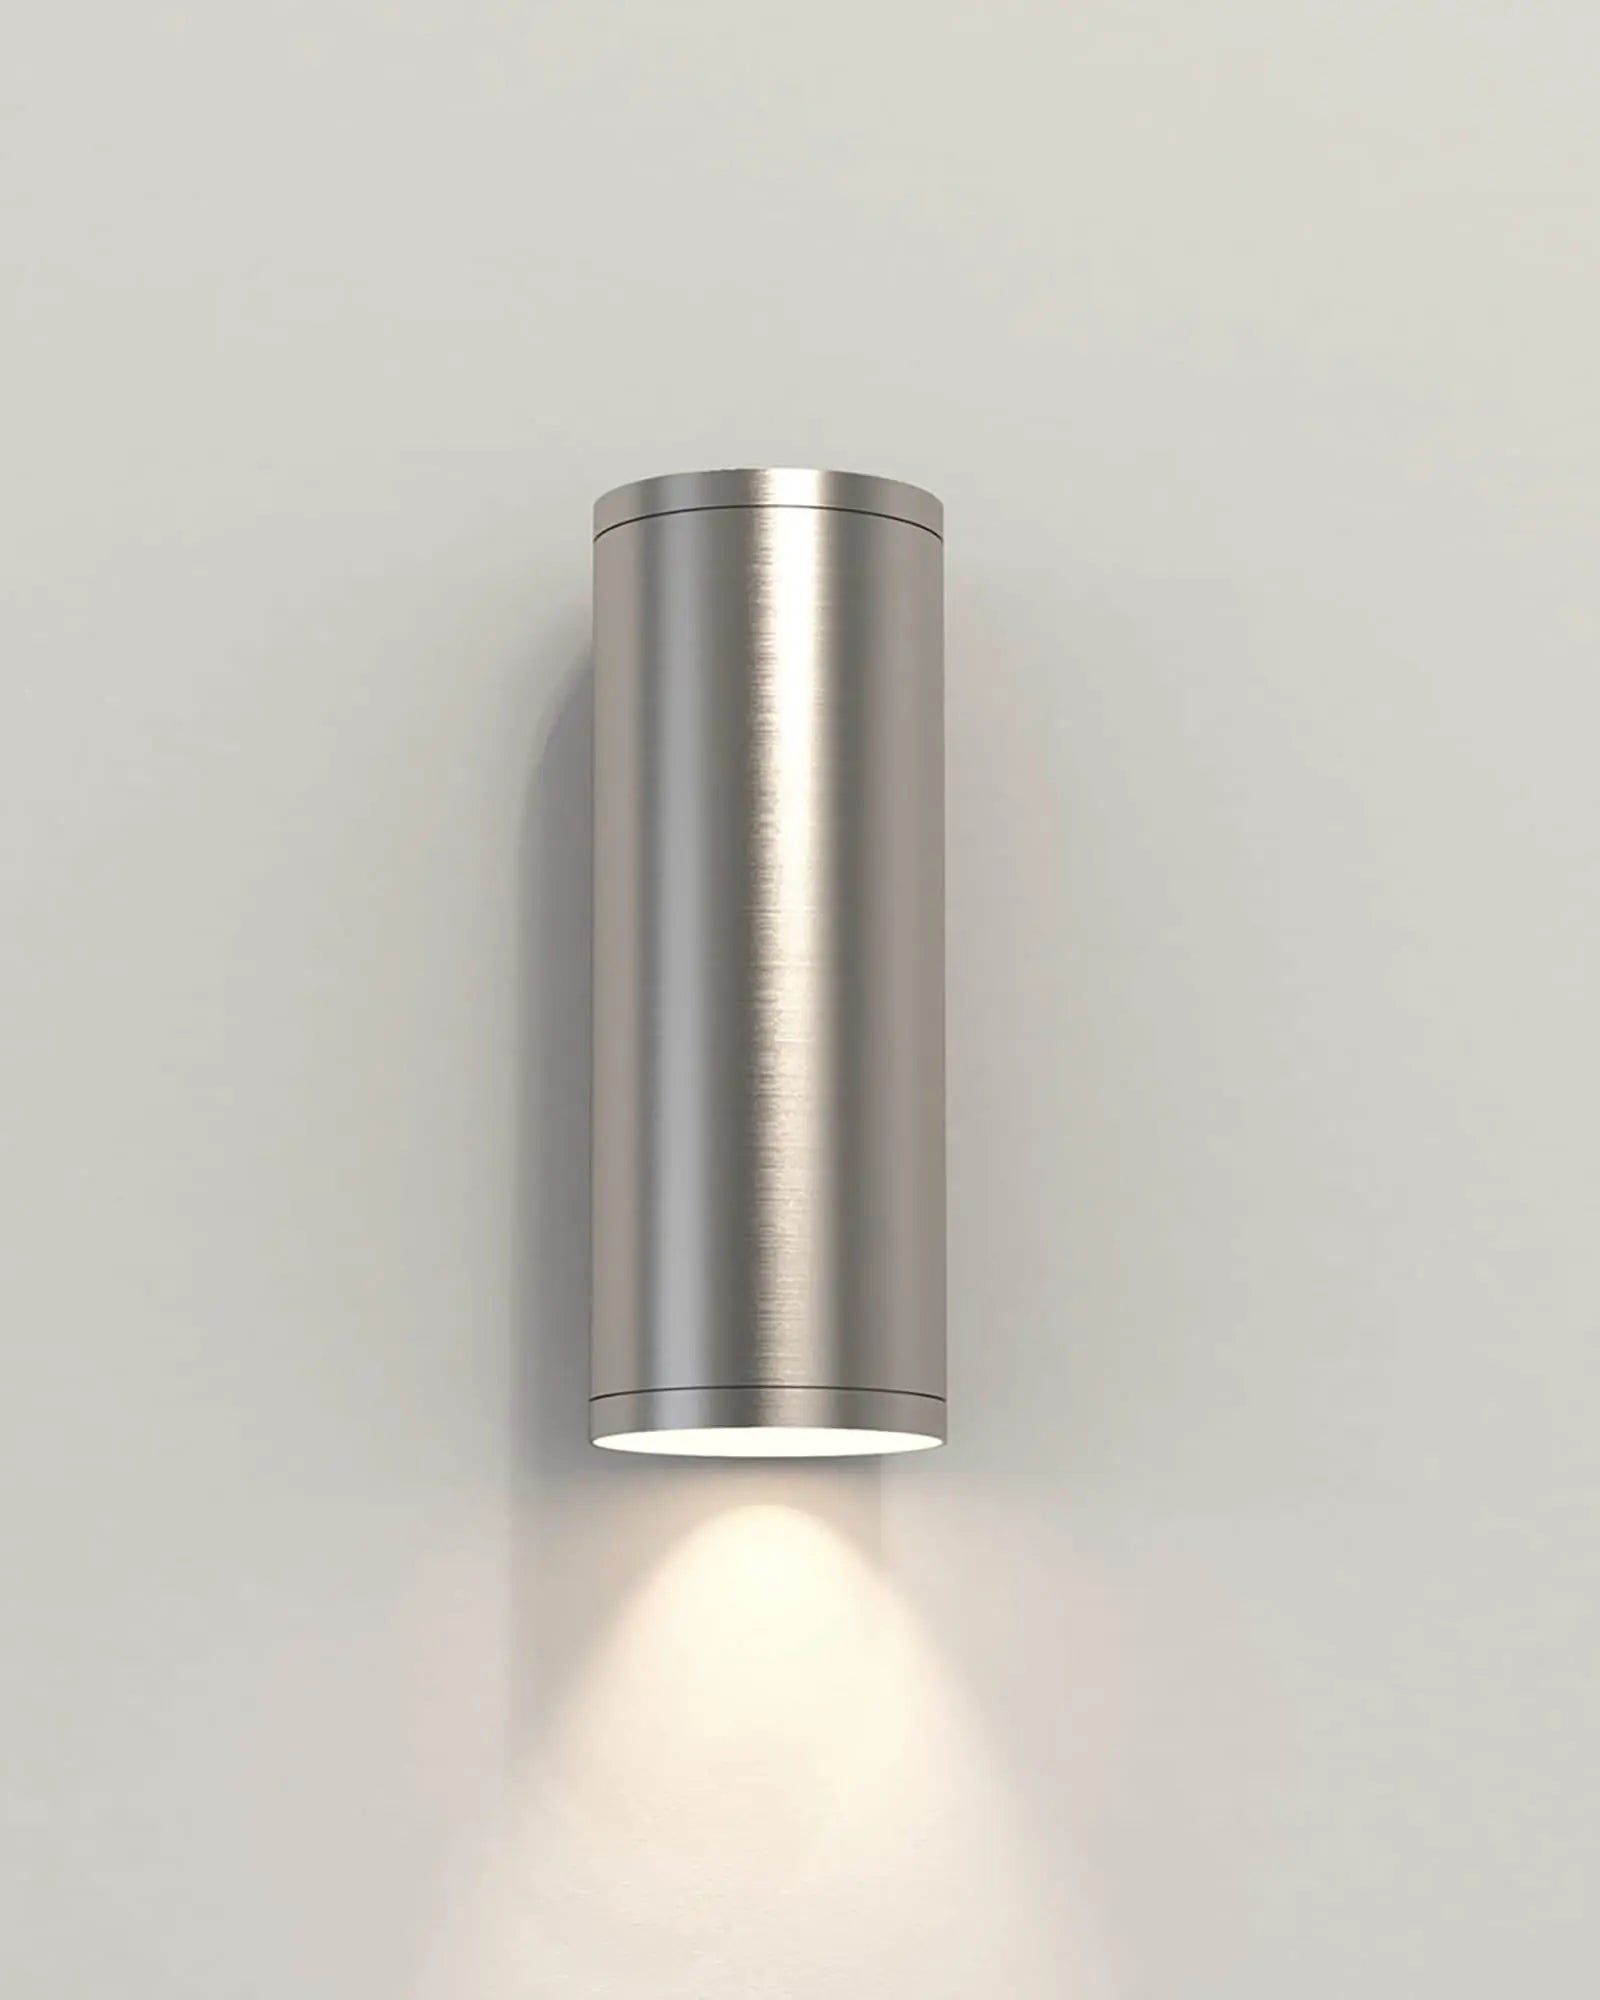 Aba minimalistic cylinder outdoor wall light nickel small